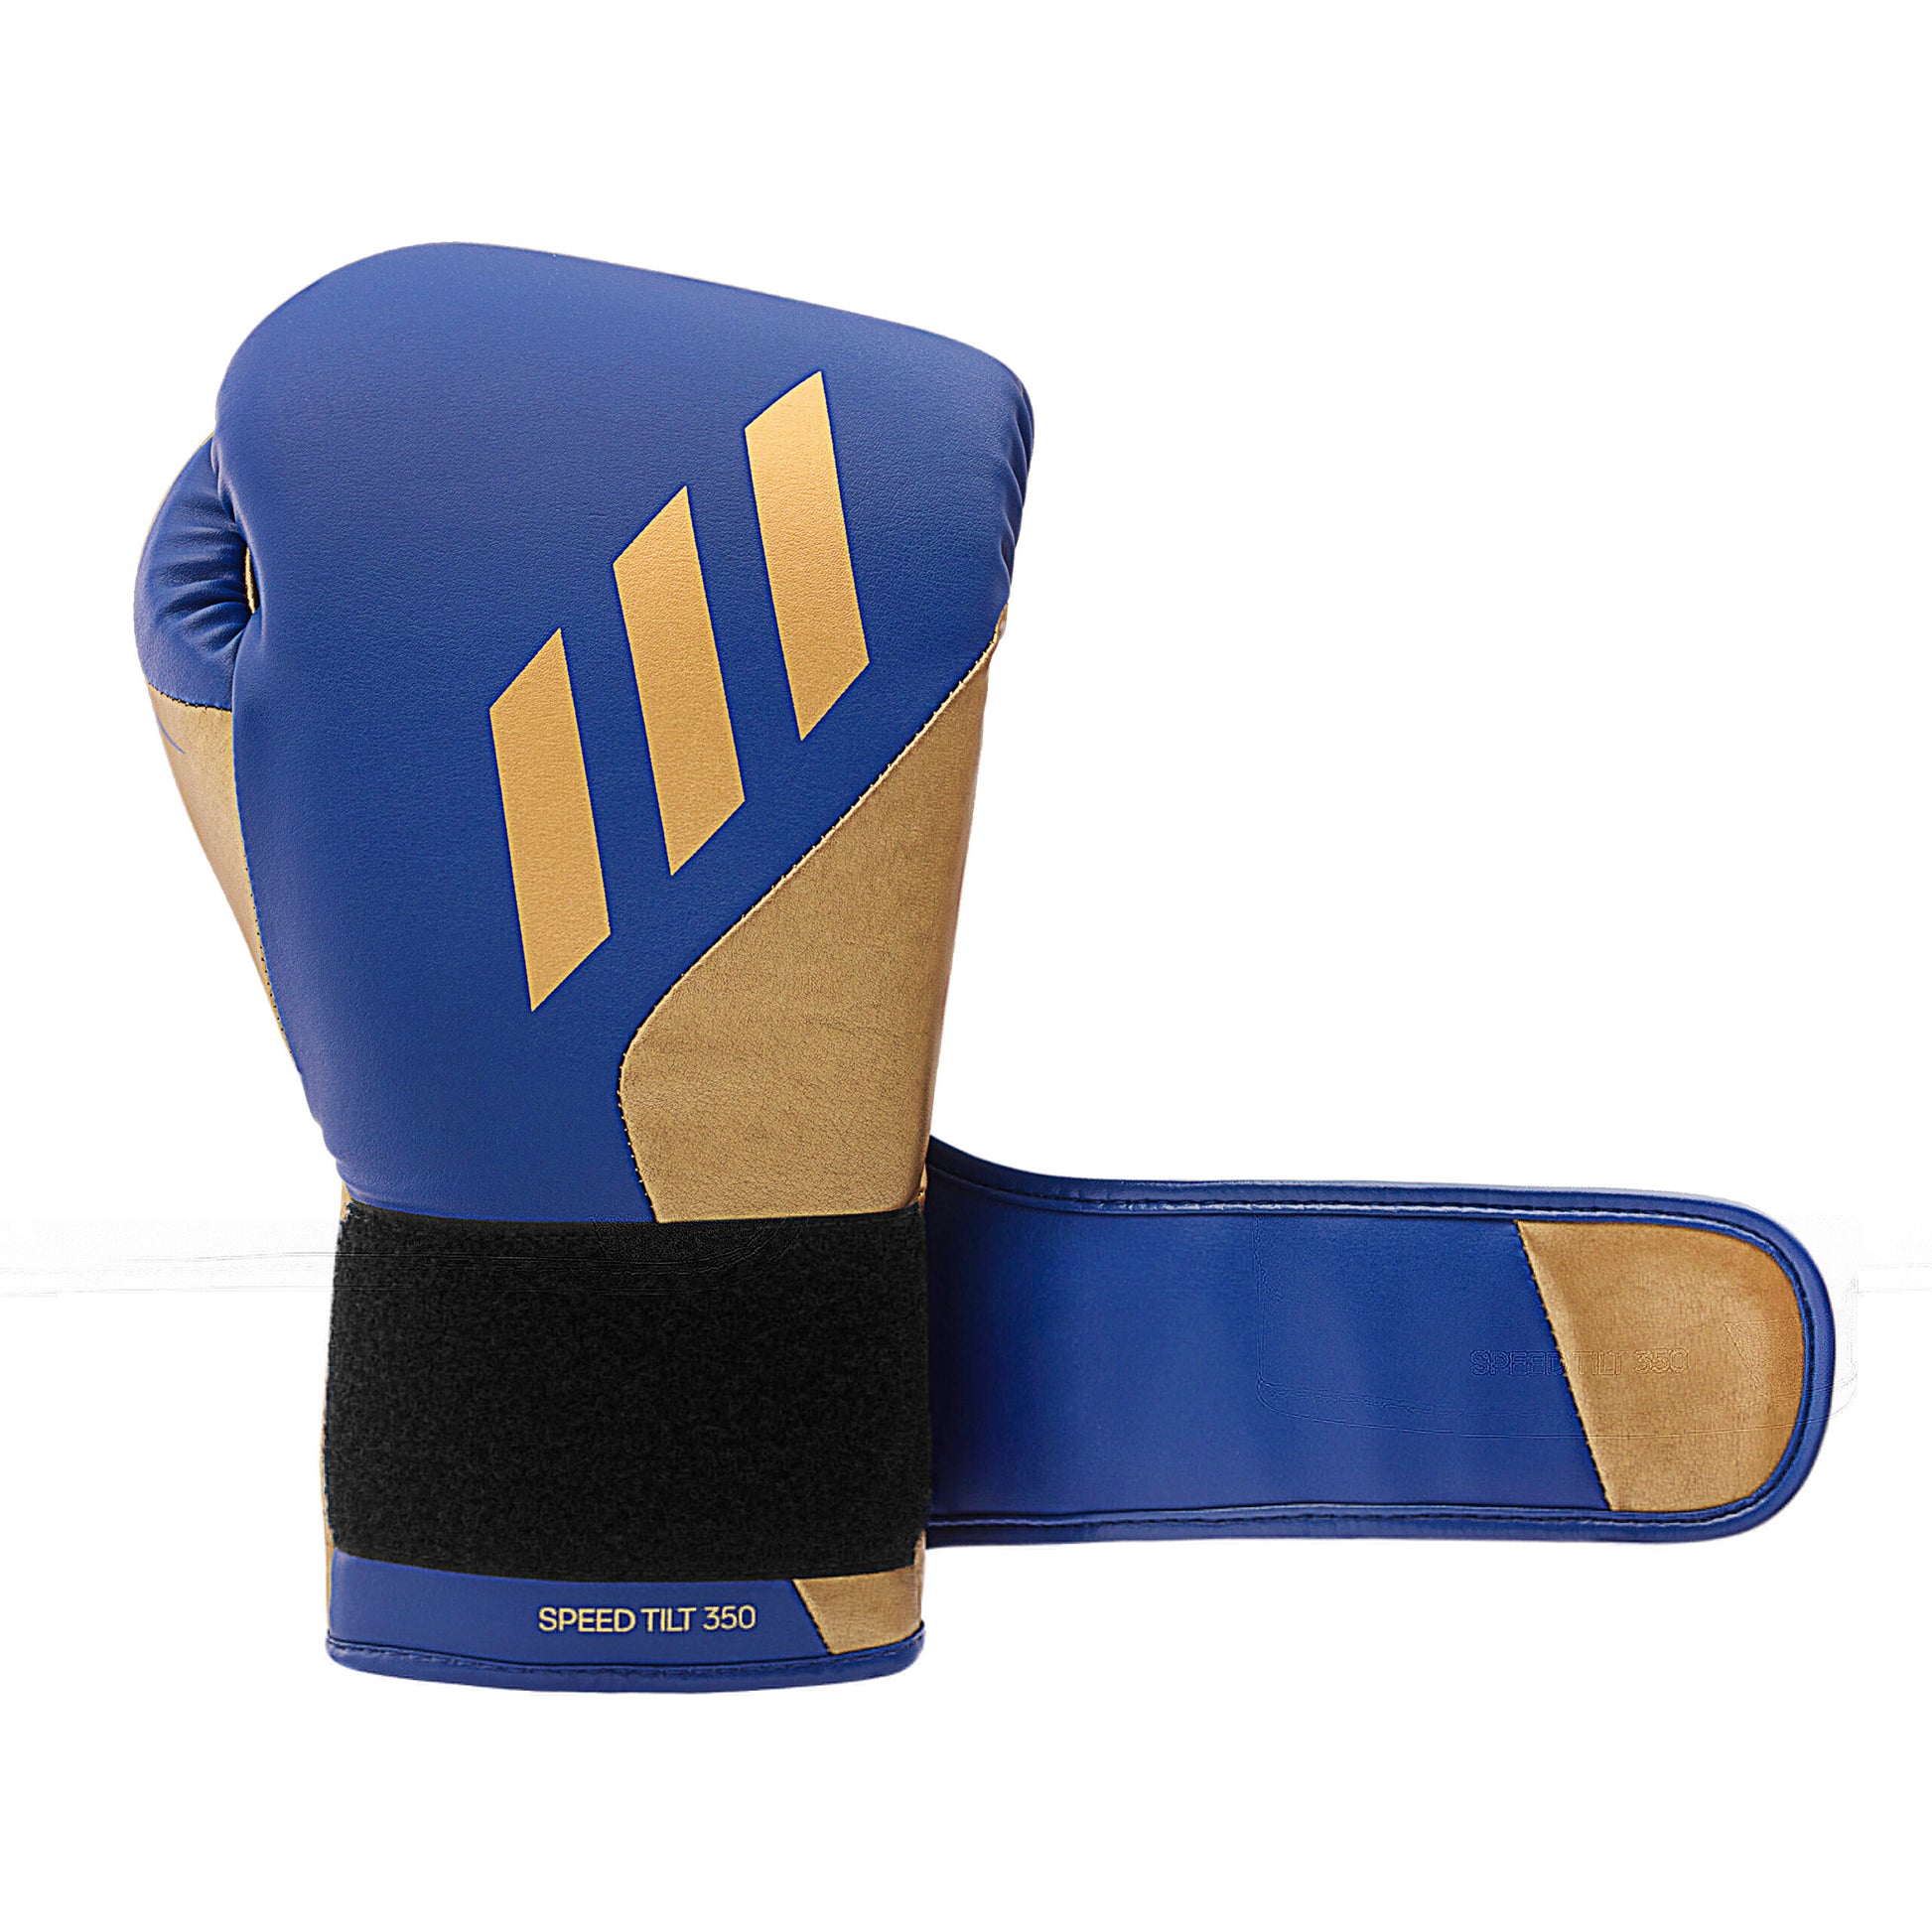 Adispd350tg Adidas Tilt Speed 350 Boxiing Gloves Blue Gold 04